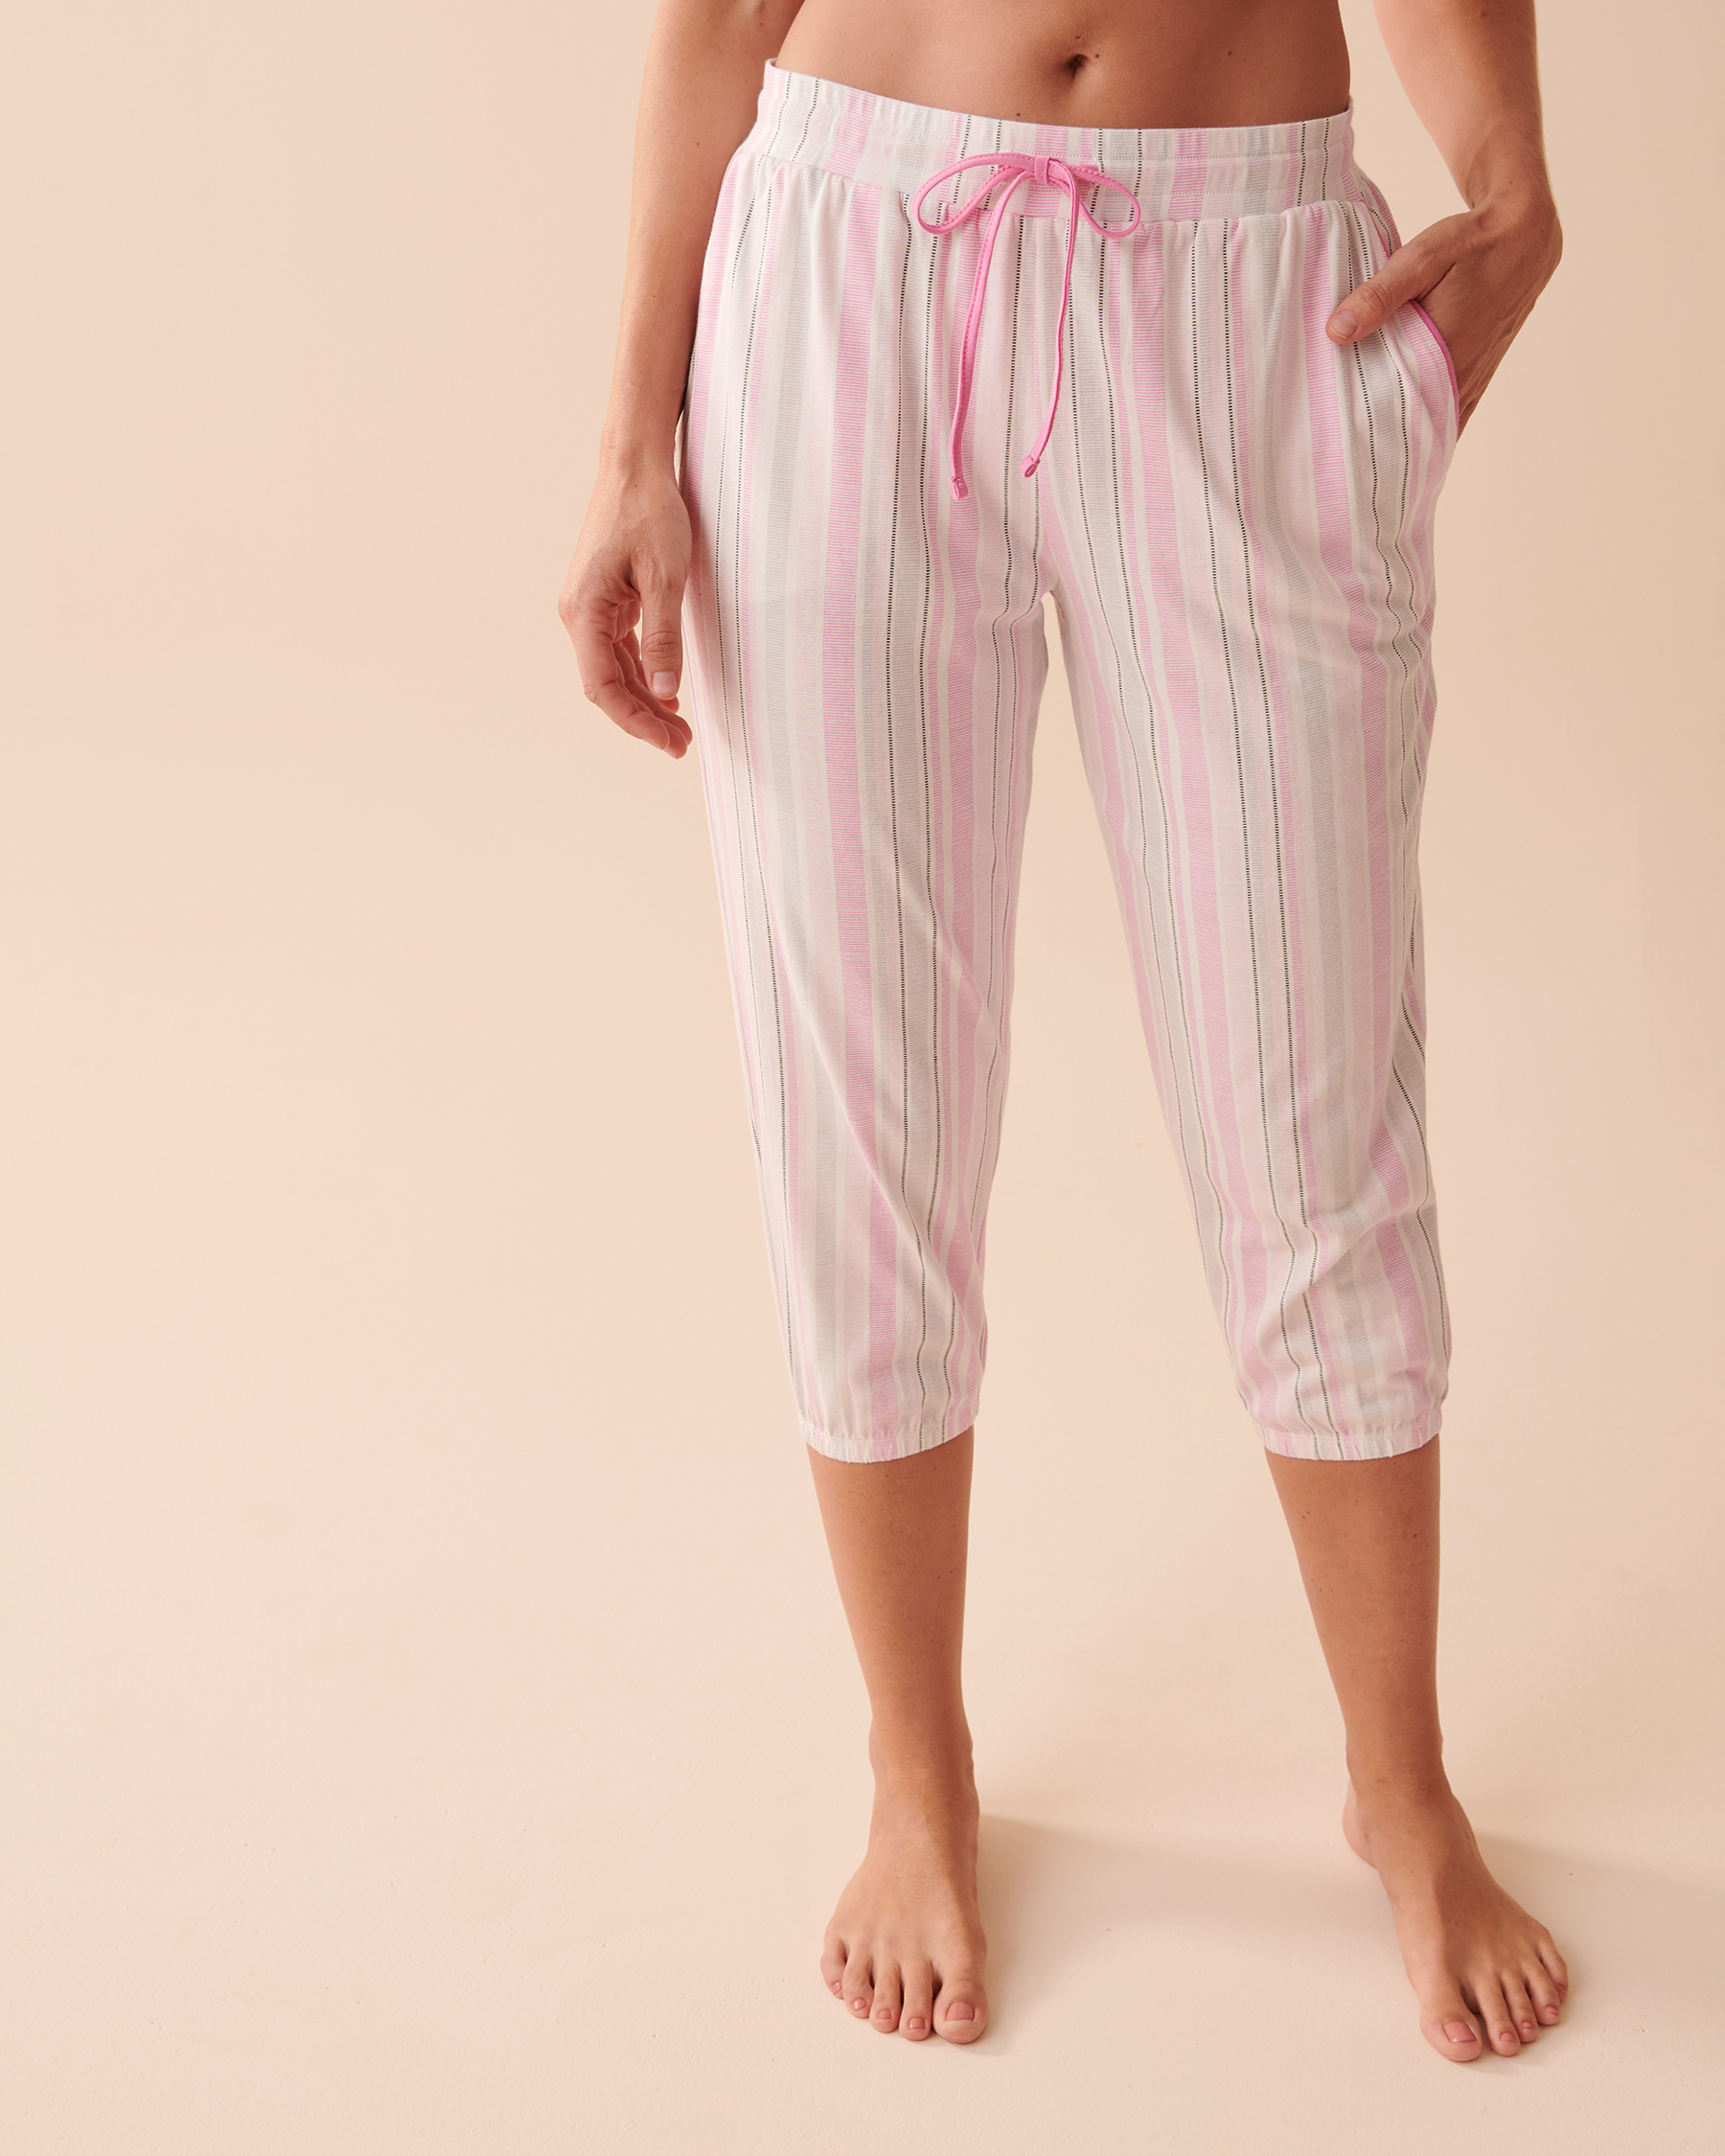 Striped Cotton Capris - Pink Stripes